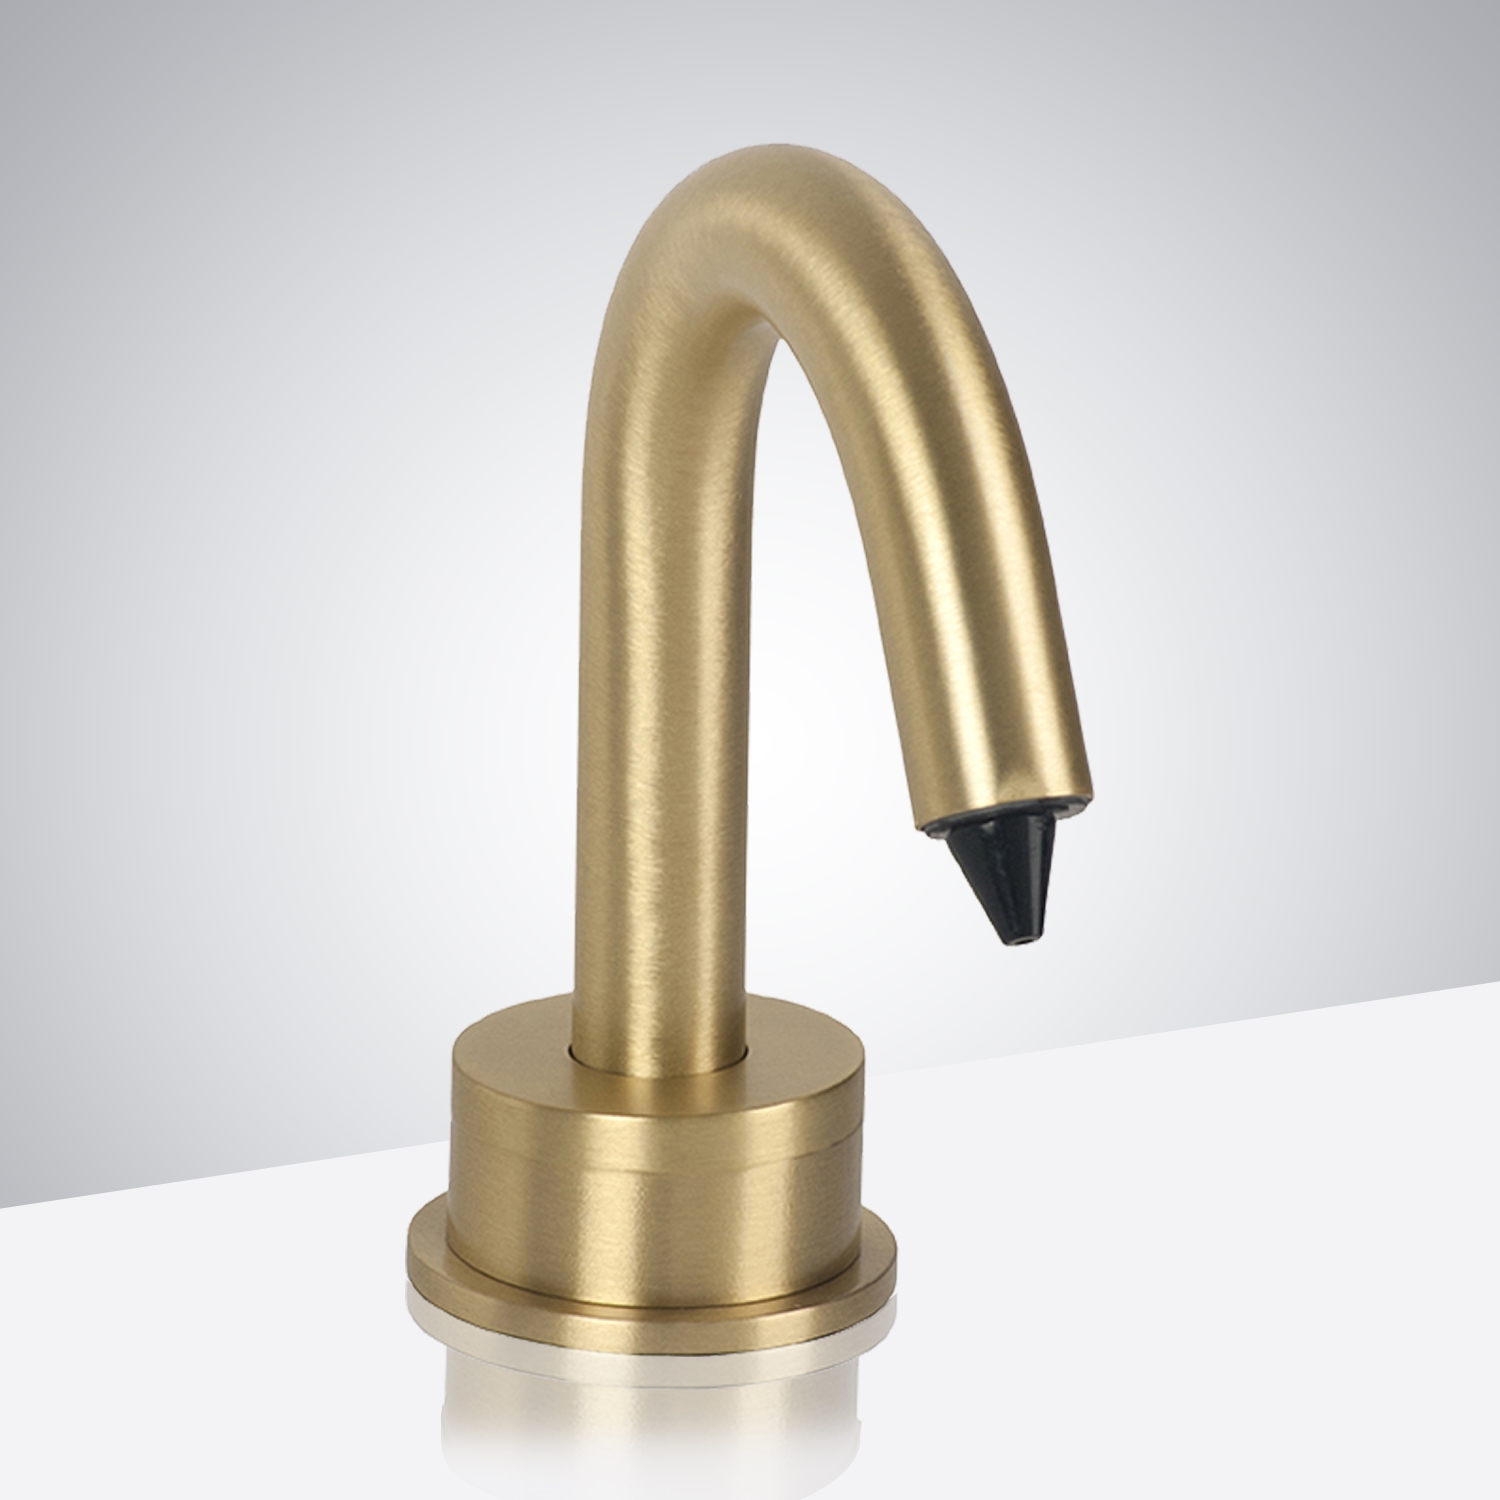 Reno Designed For 1" High Sink Sensor Soap Dispenser